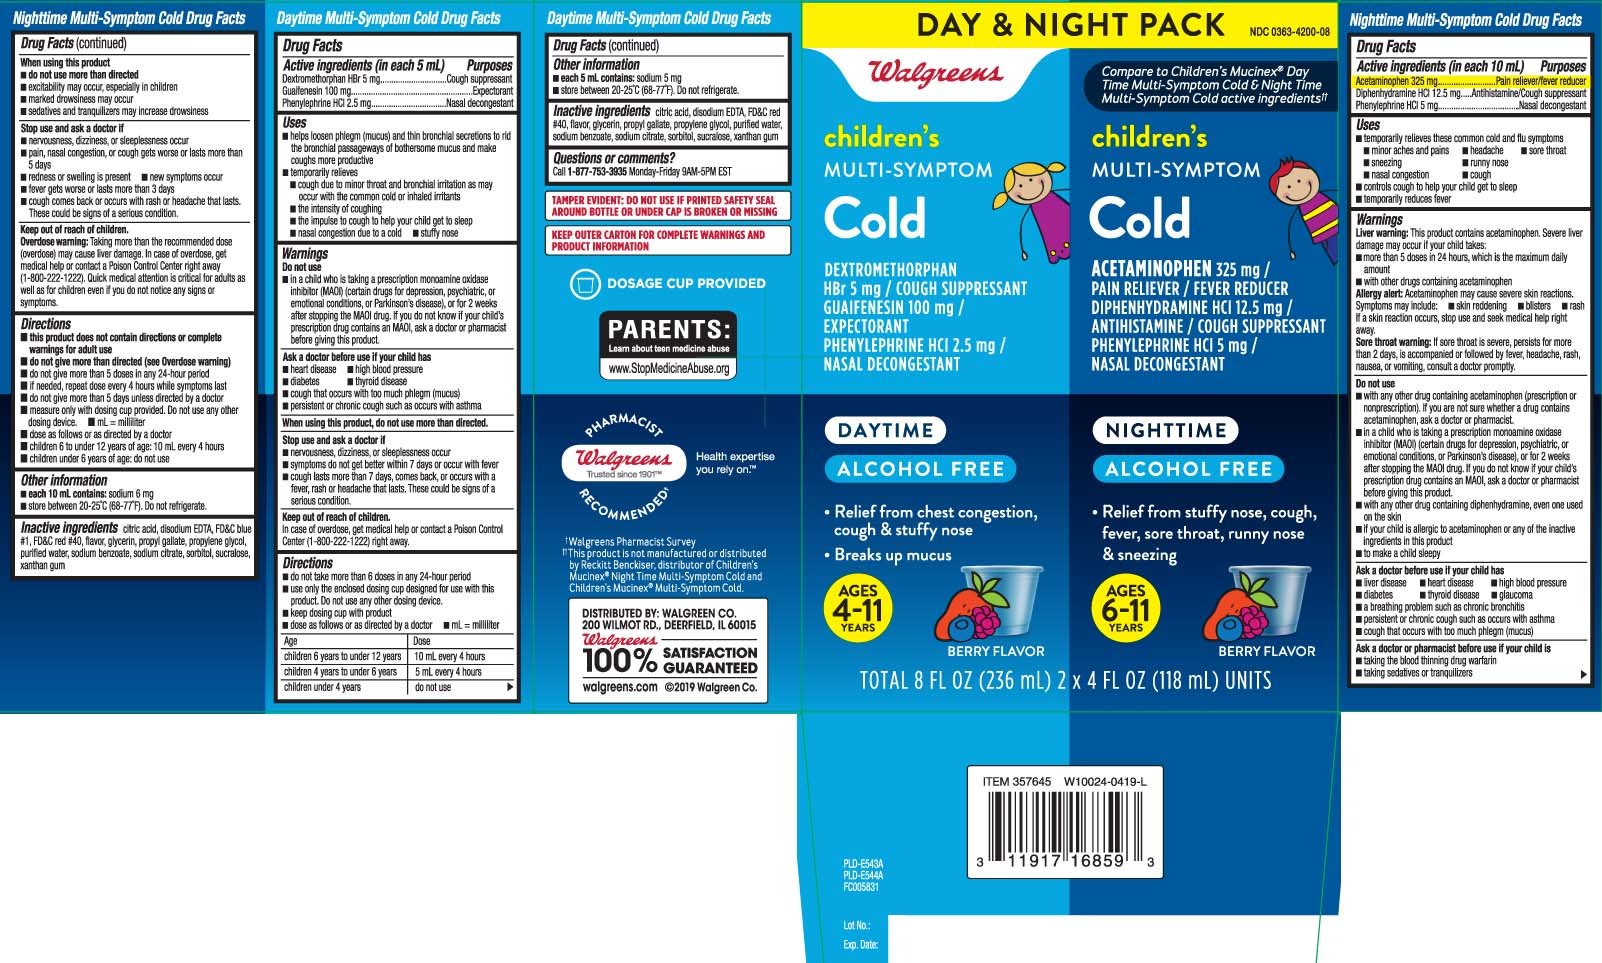 daytime-nighttime-multi-symptom-cold-childrens-kit-walgreens